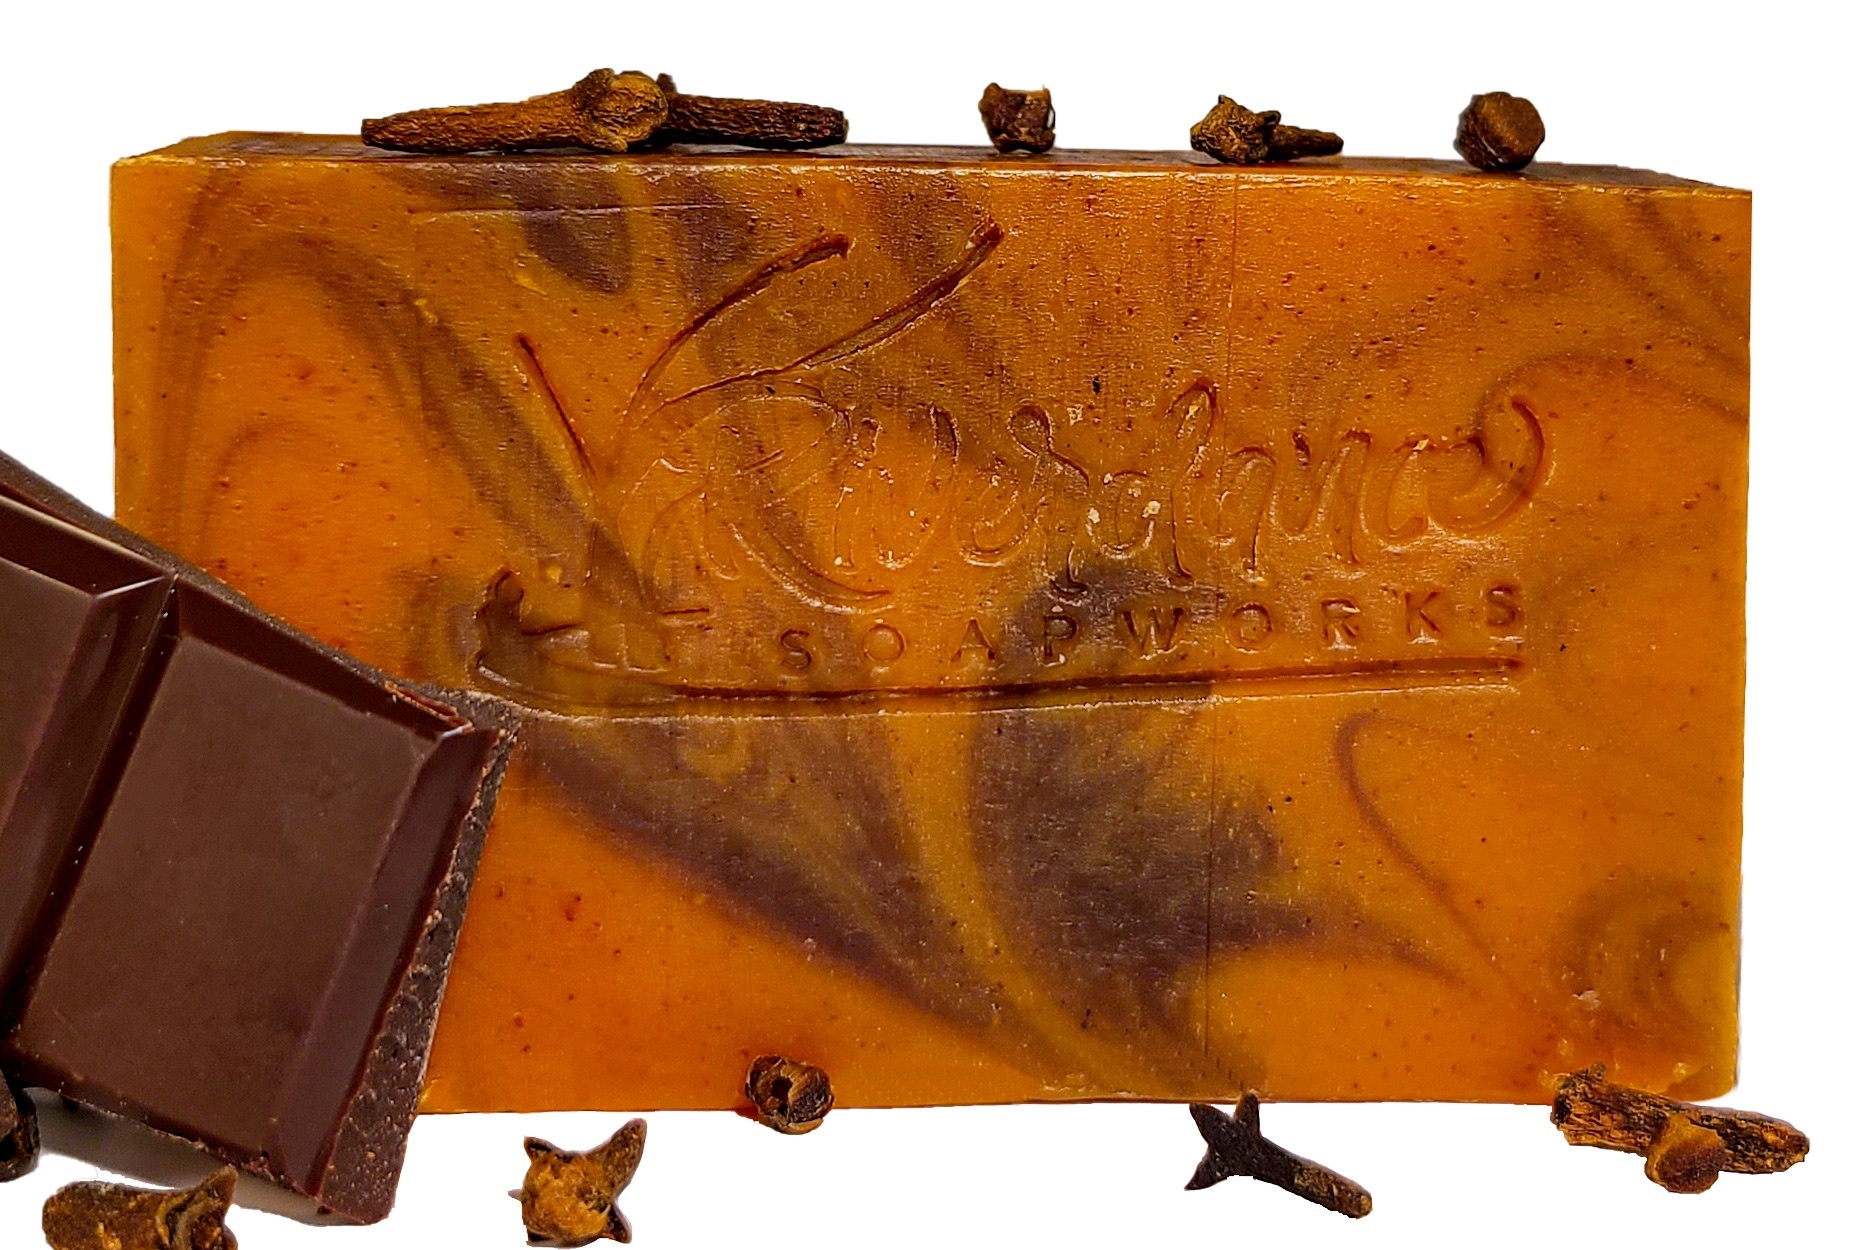 Vetiver clove orange soap product image